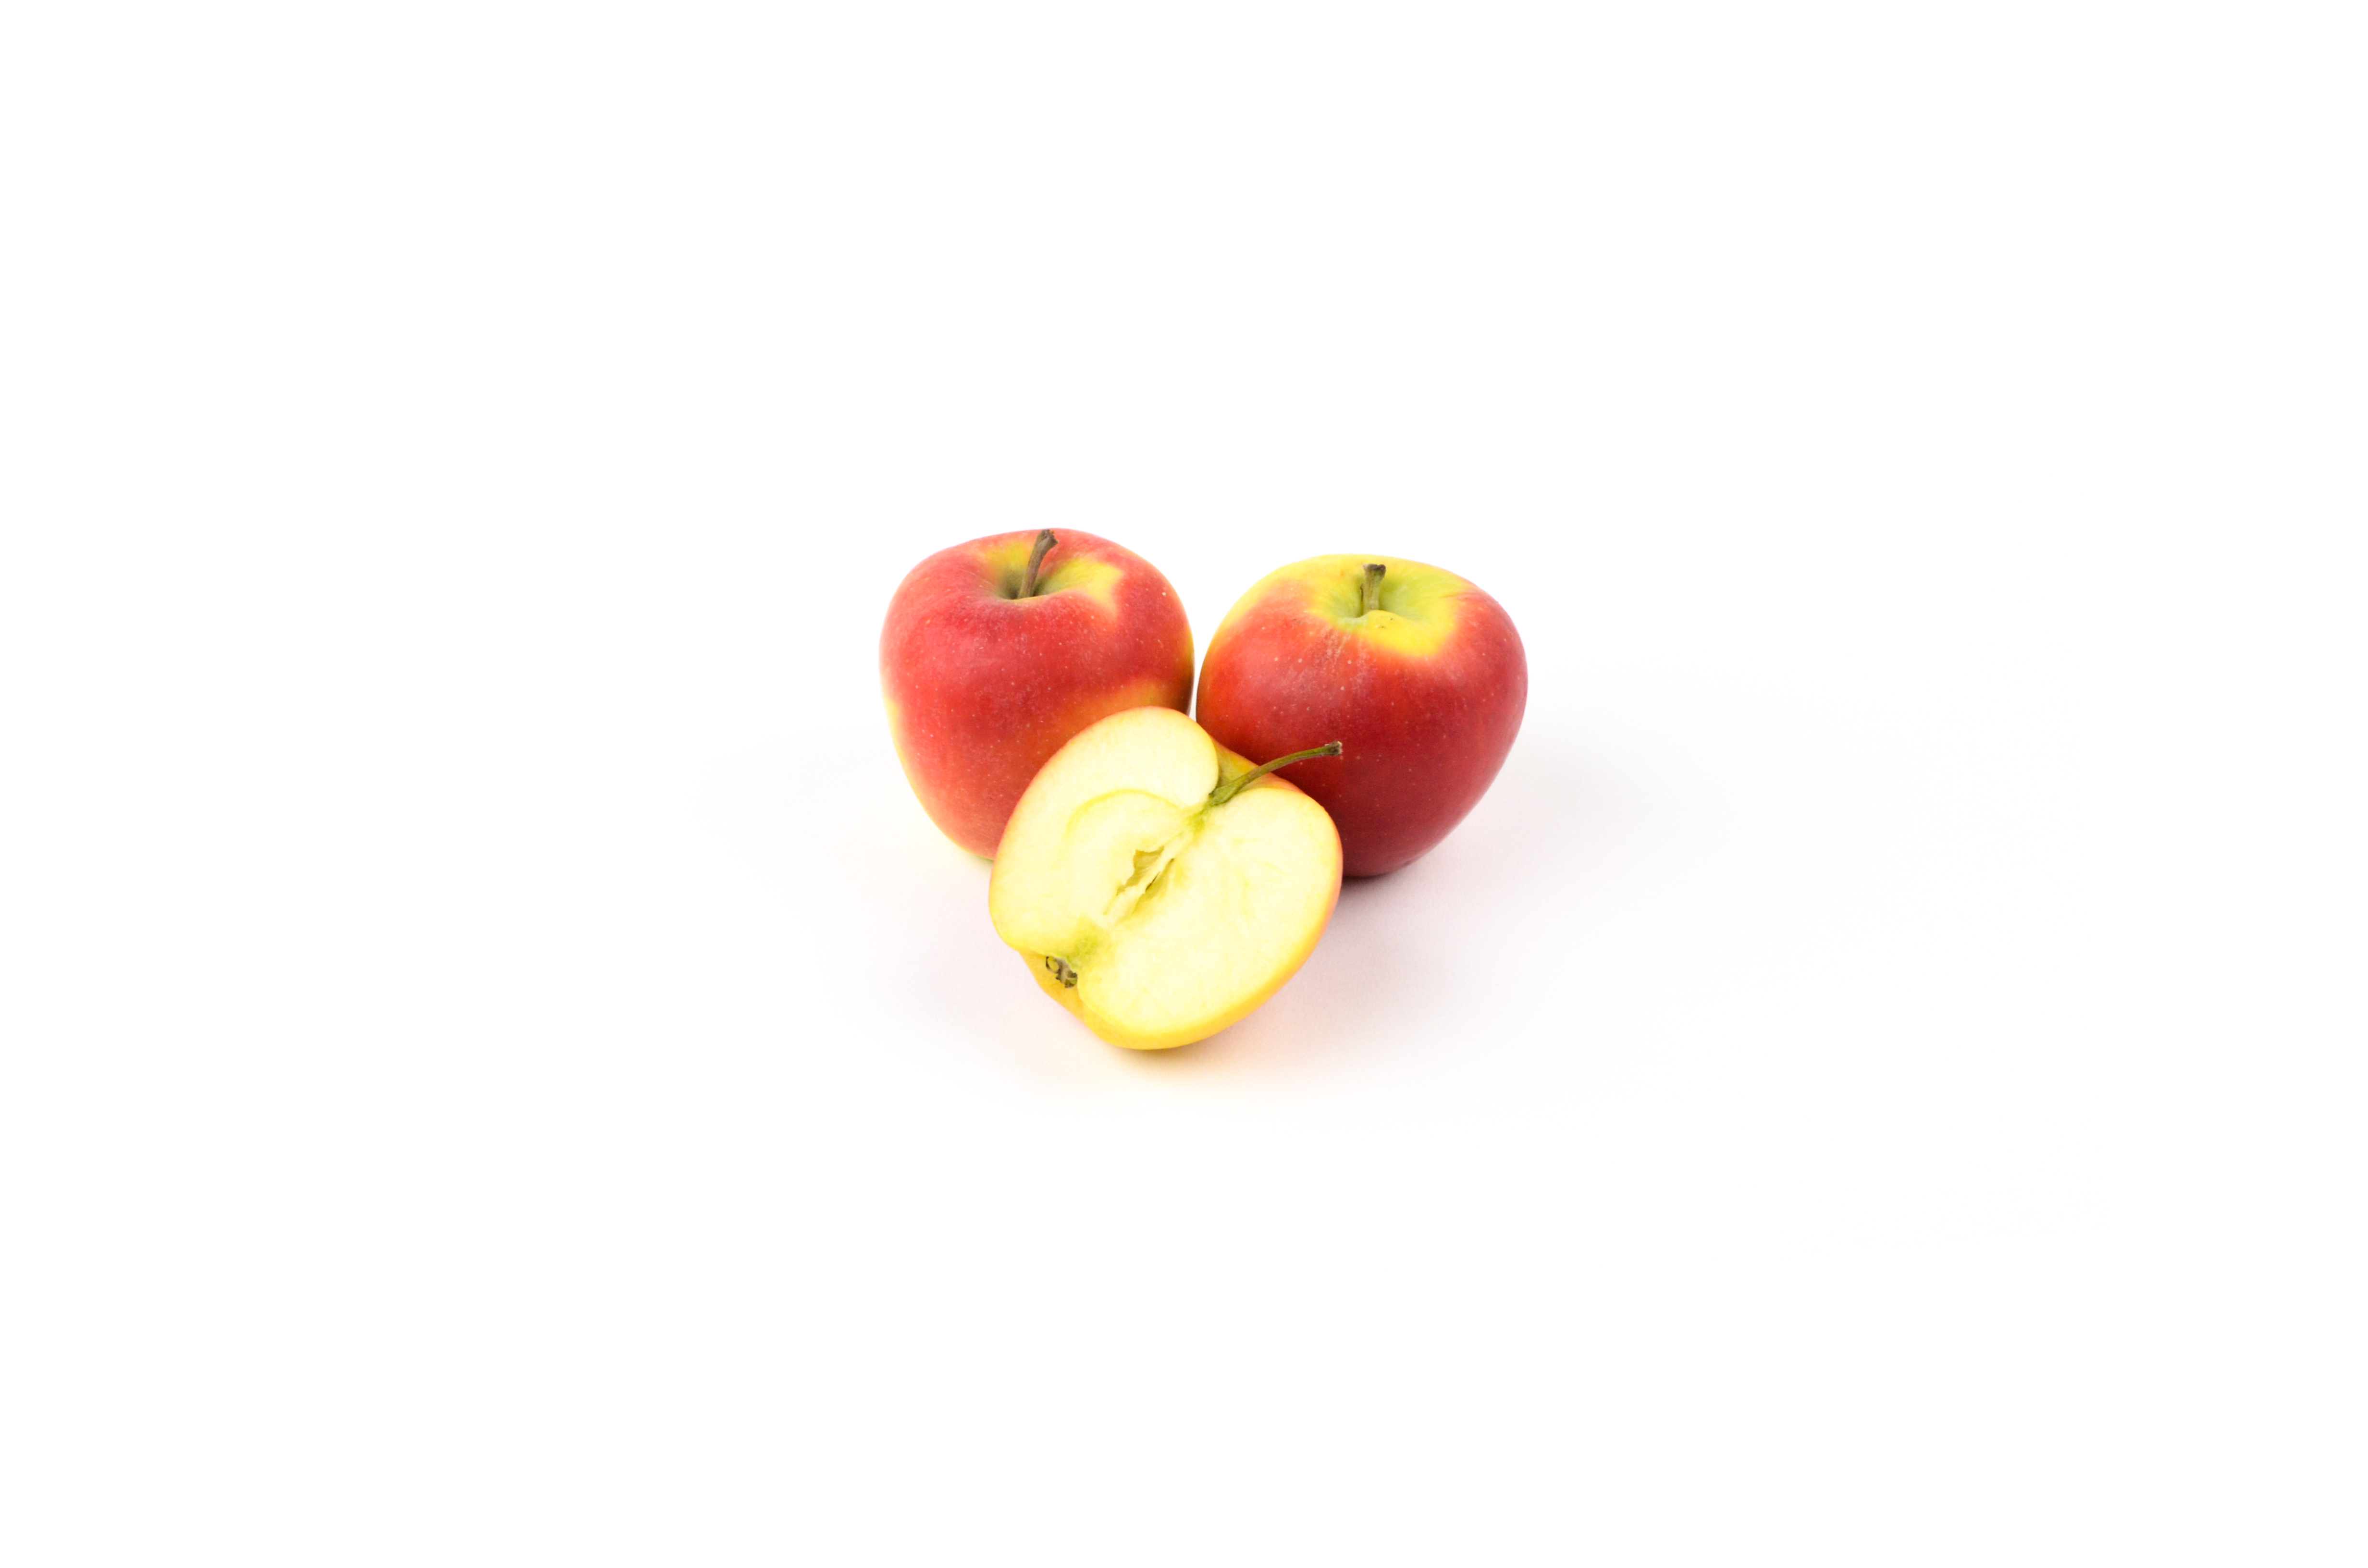 Apfel Pinova